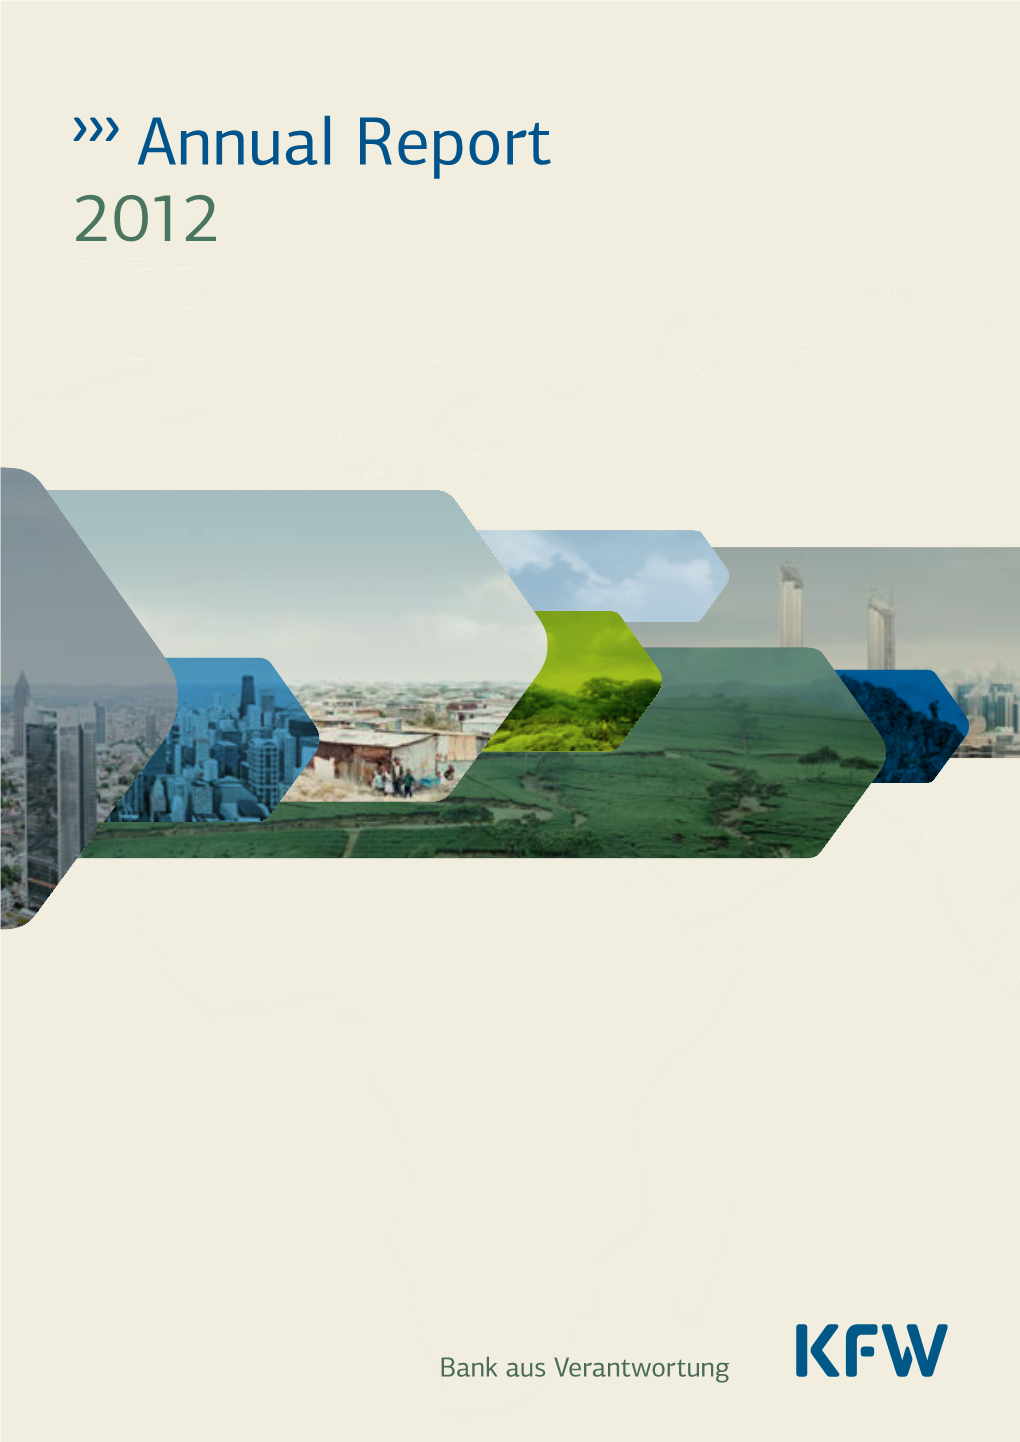 °Annual Report 2012 ˚Improving International Prospects